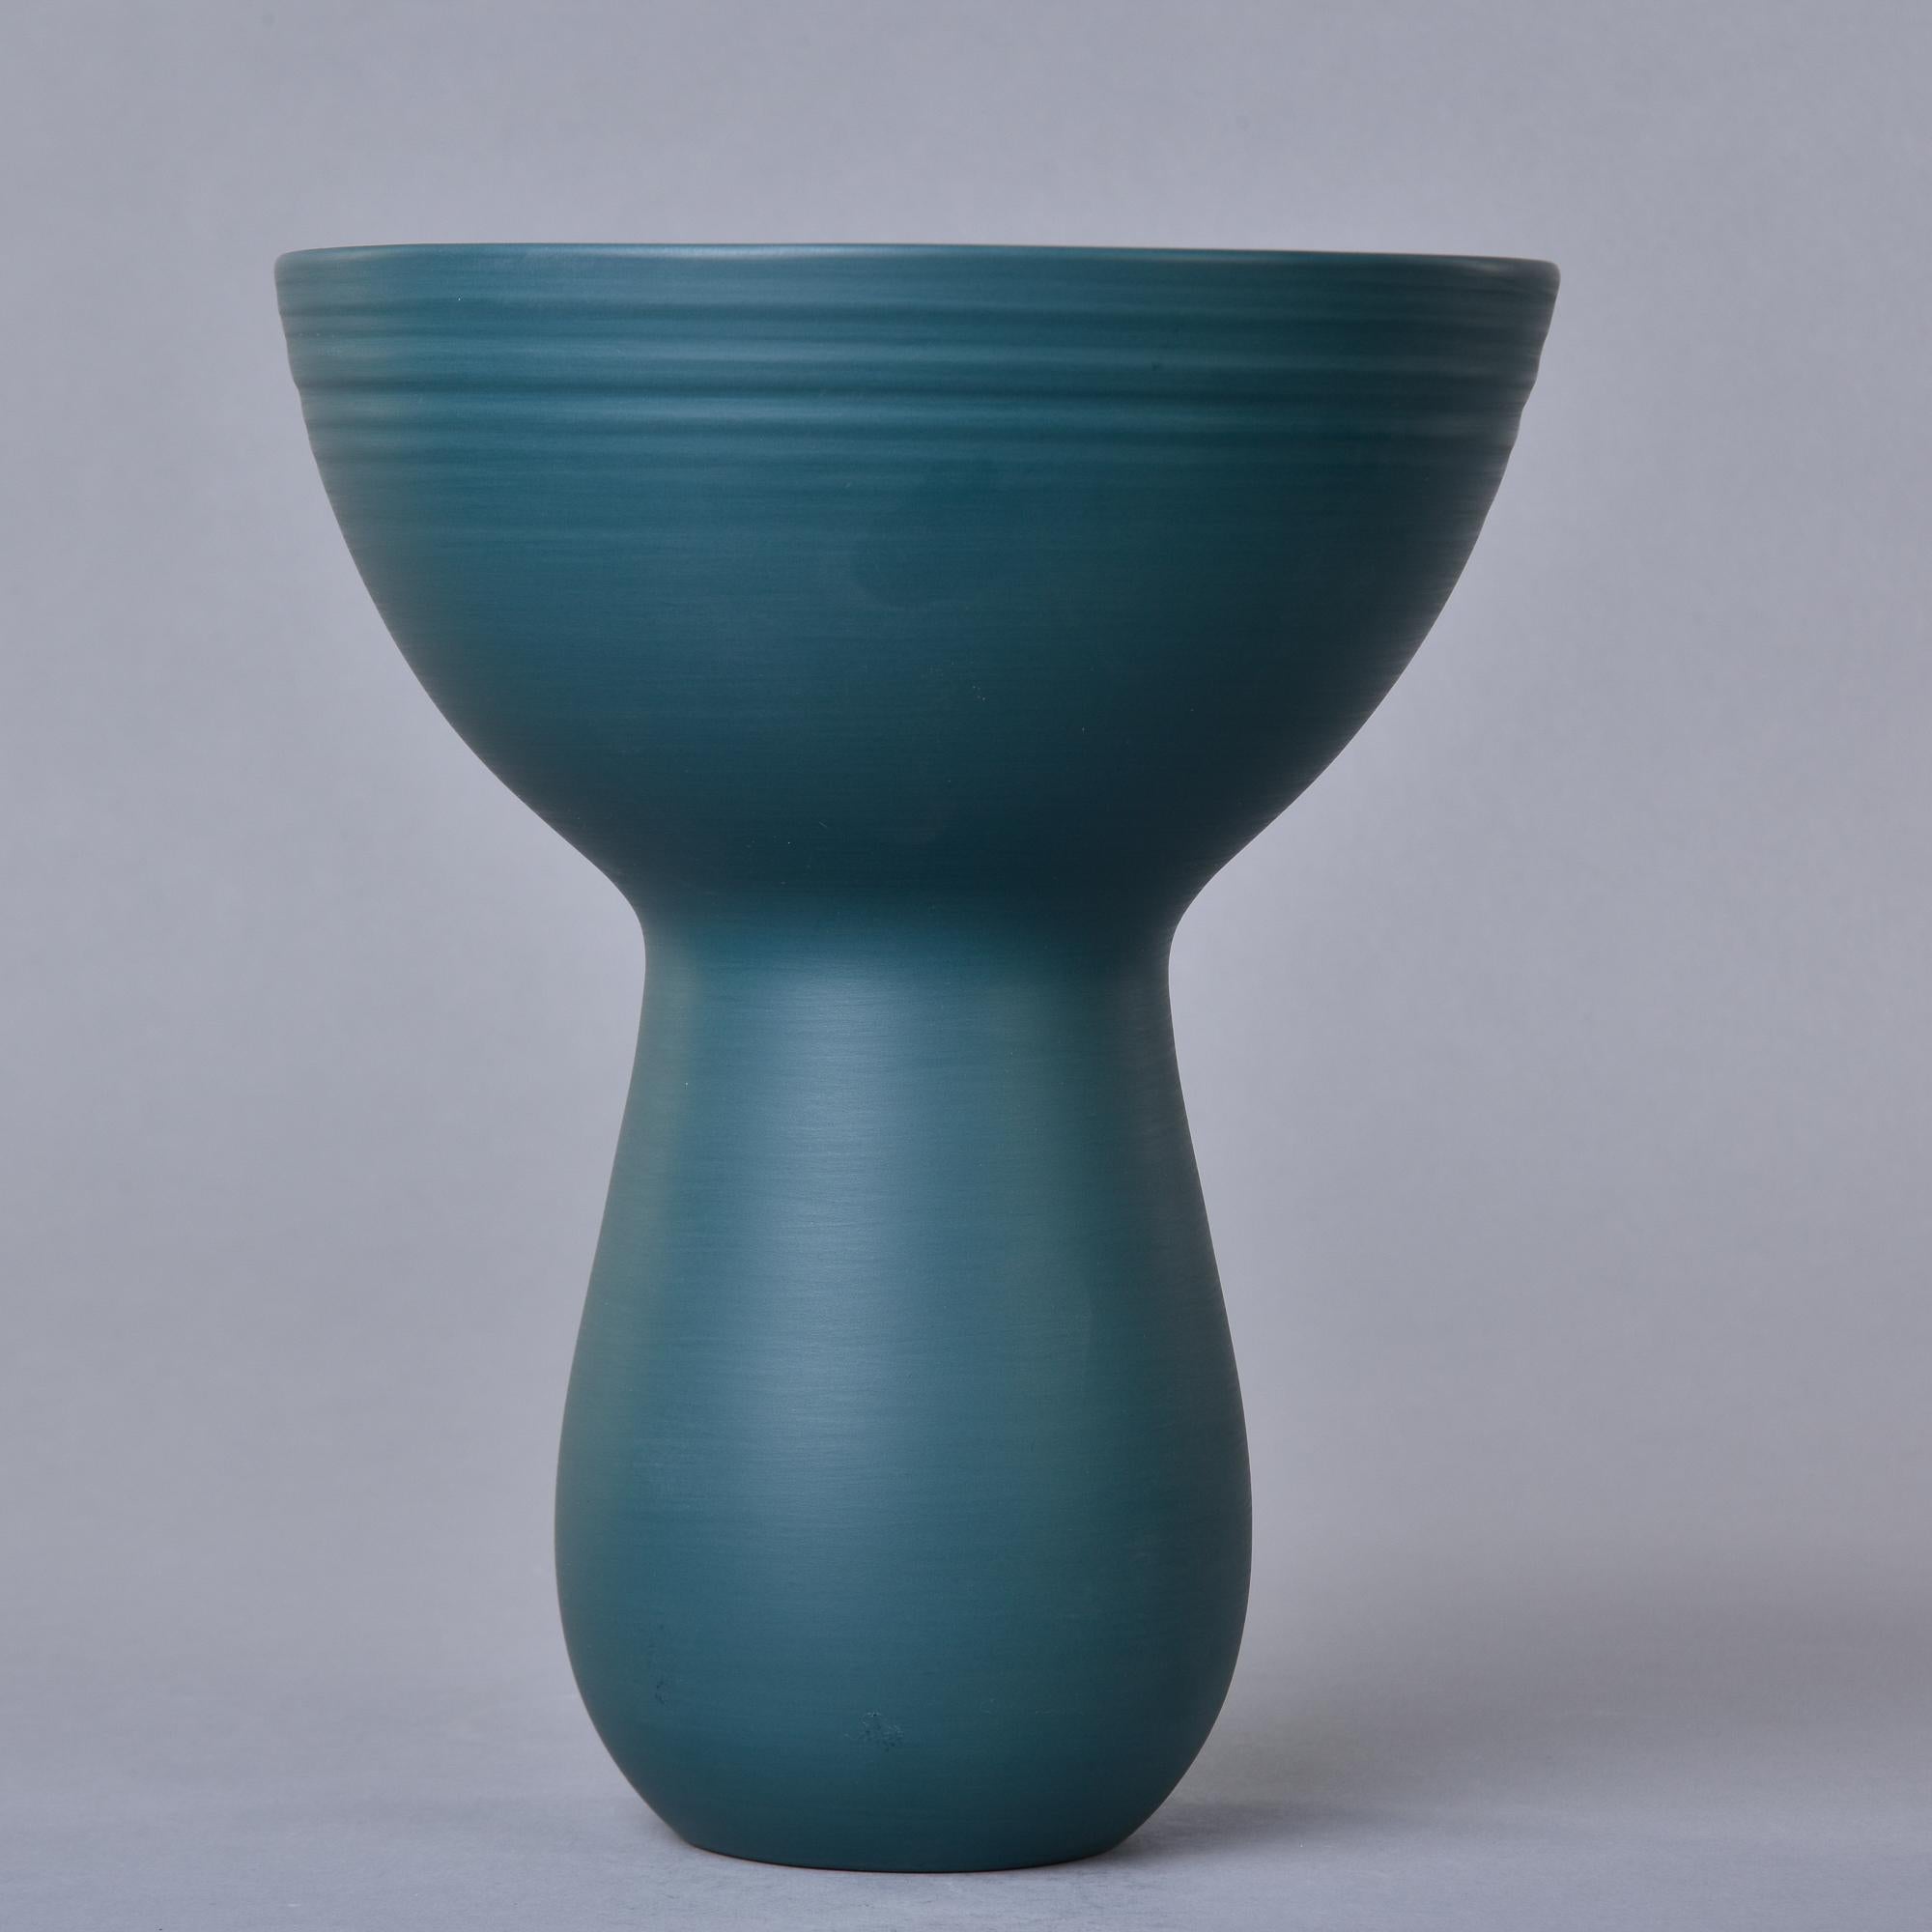 Italian Rina Menardi Bouquet Vase in Teal Green Glaze For Sale